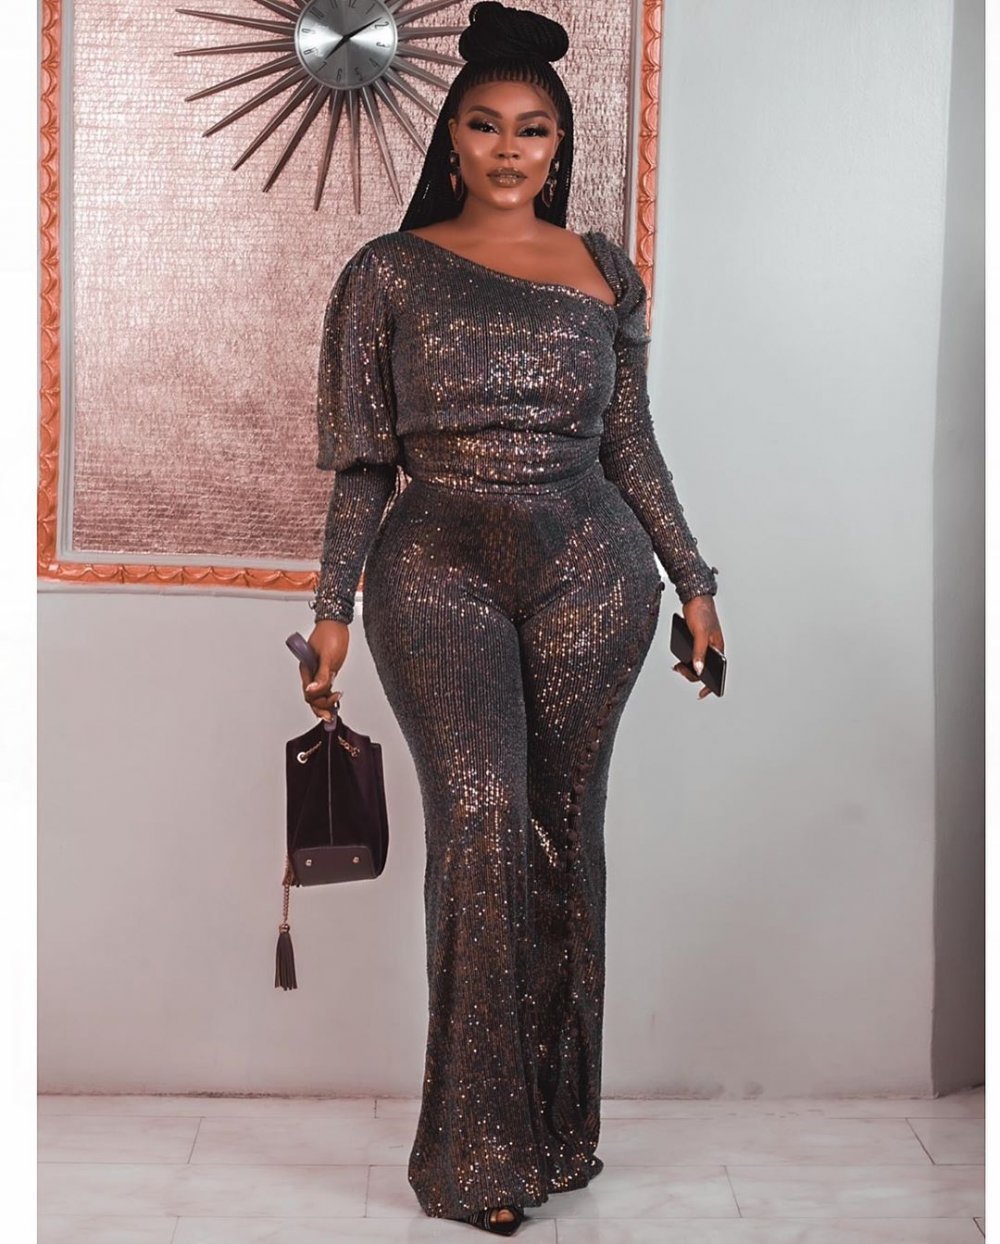 Top Twelve Curvy Female Celebrities In Nigeria - AllNews Nigeria